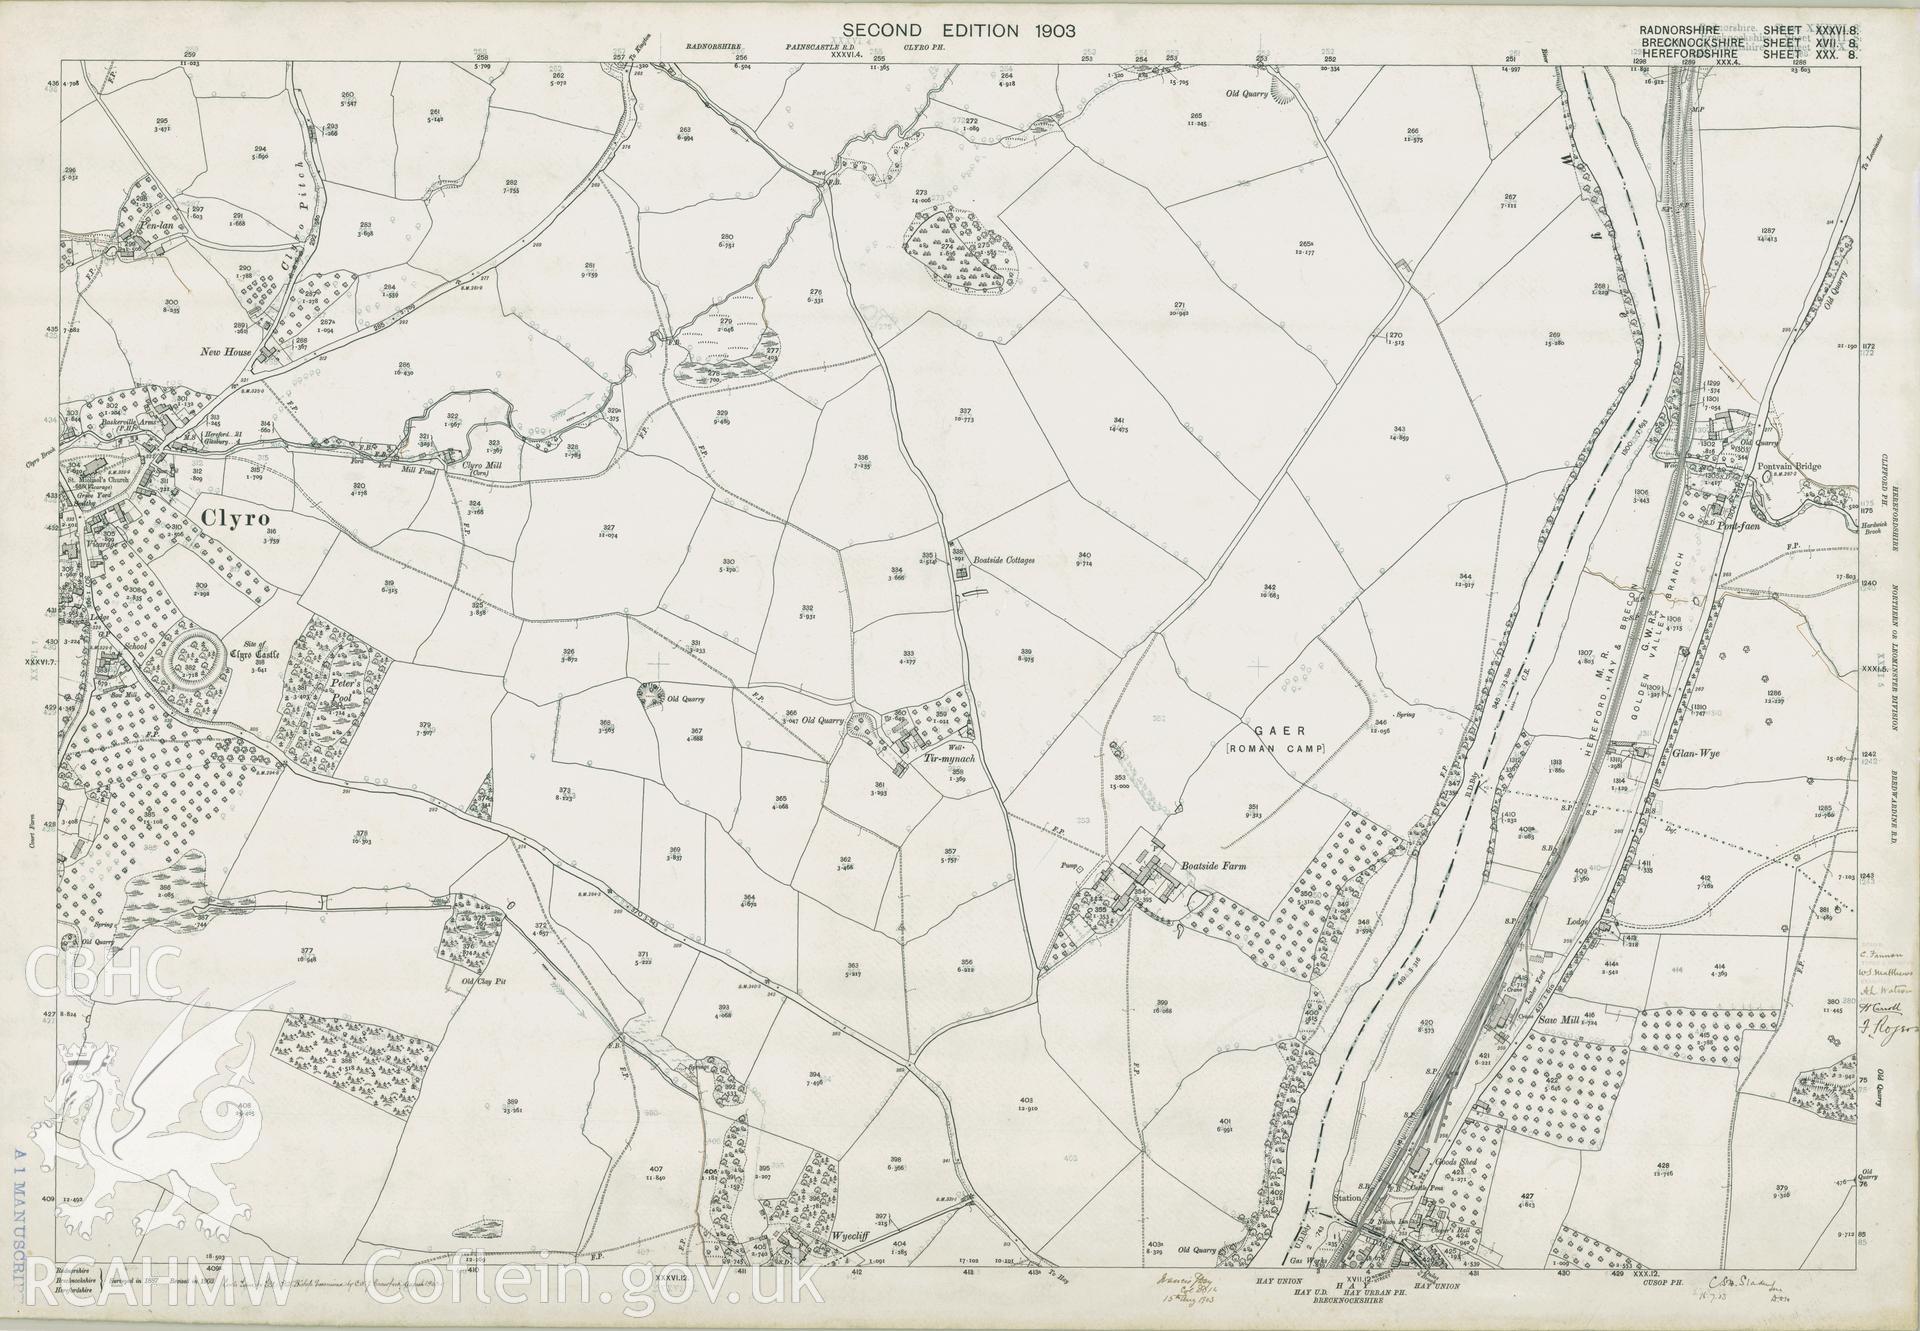 Digitized copy of Ordnance Survey 25 inch map of Clyro area 1903